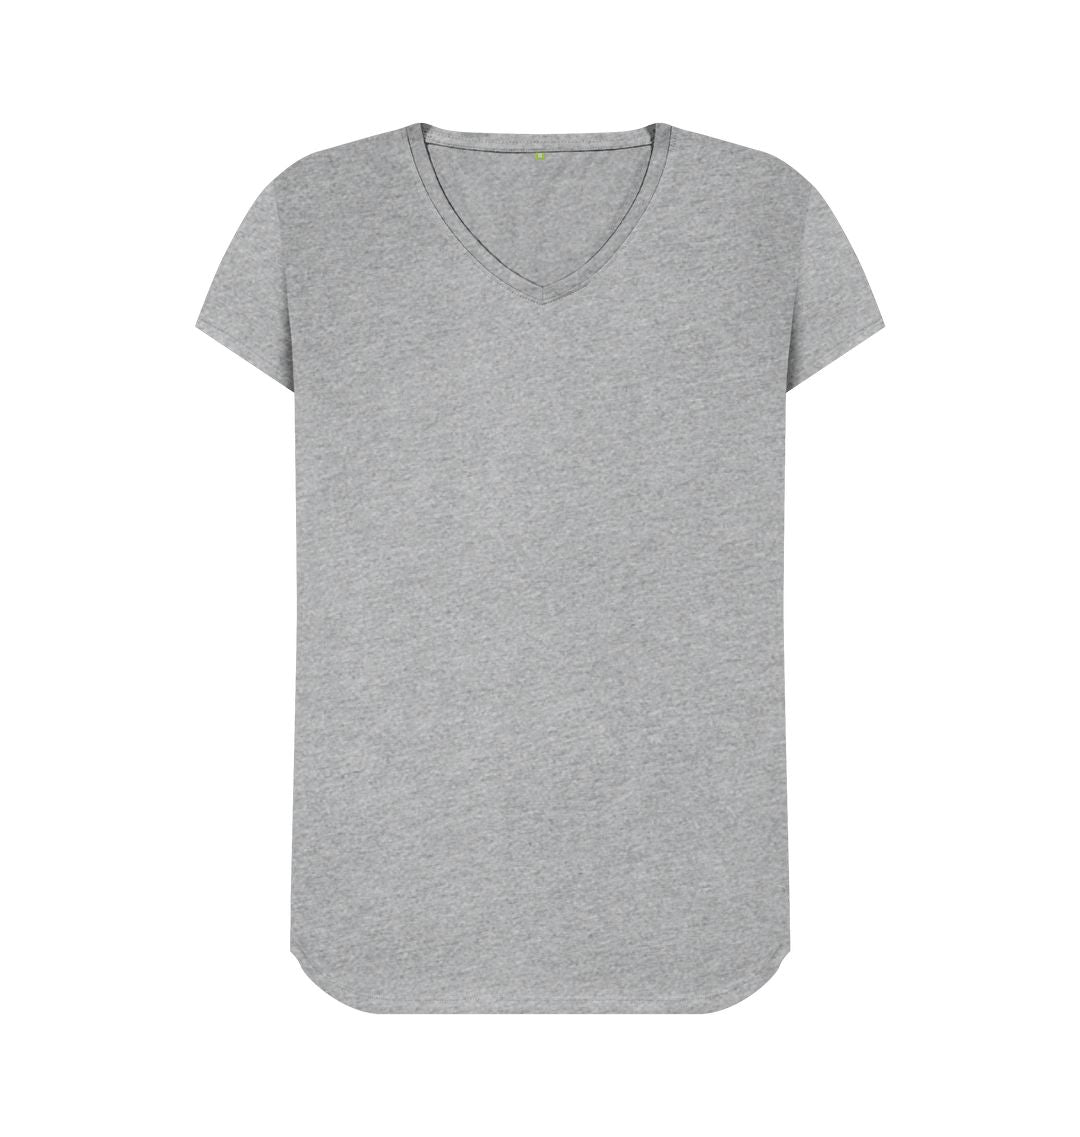 Athletic Grey Women's organic cotton v-neck t-shirt